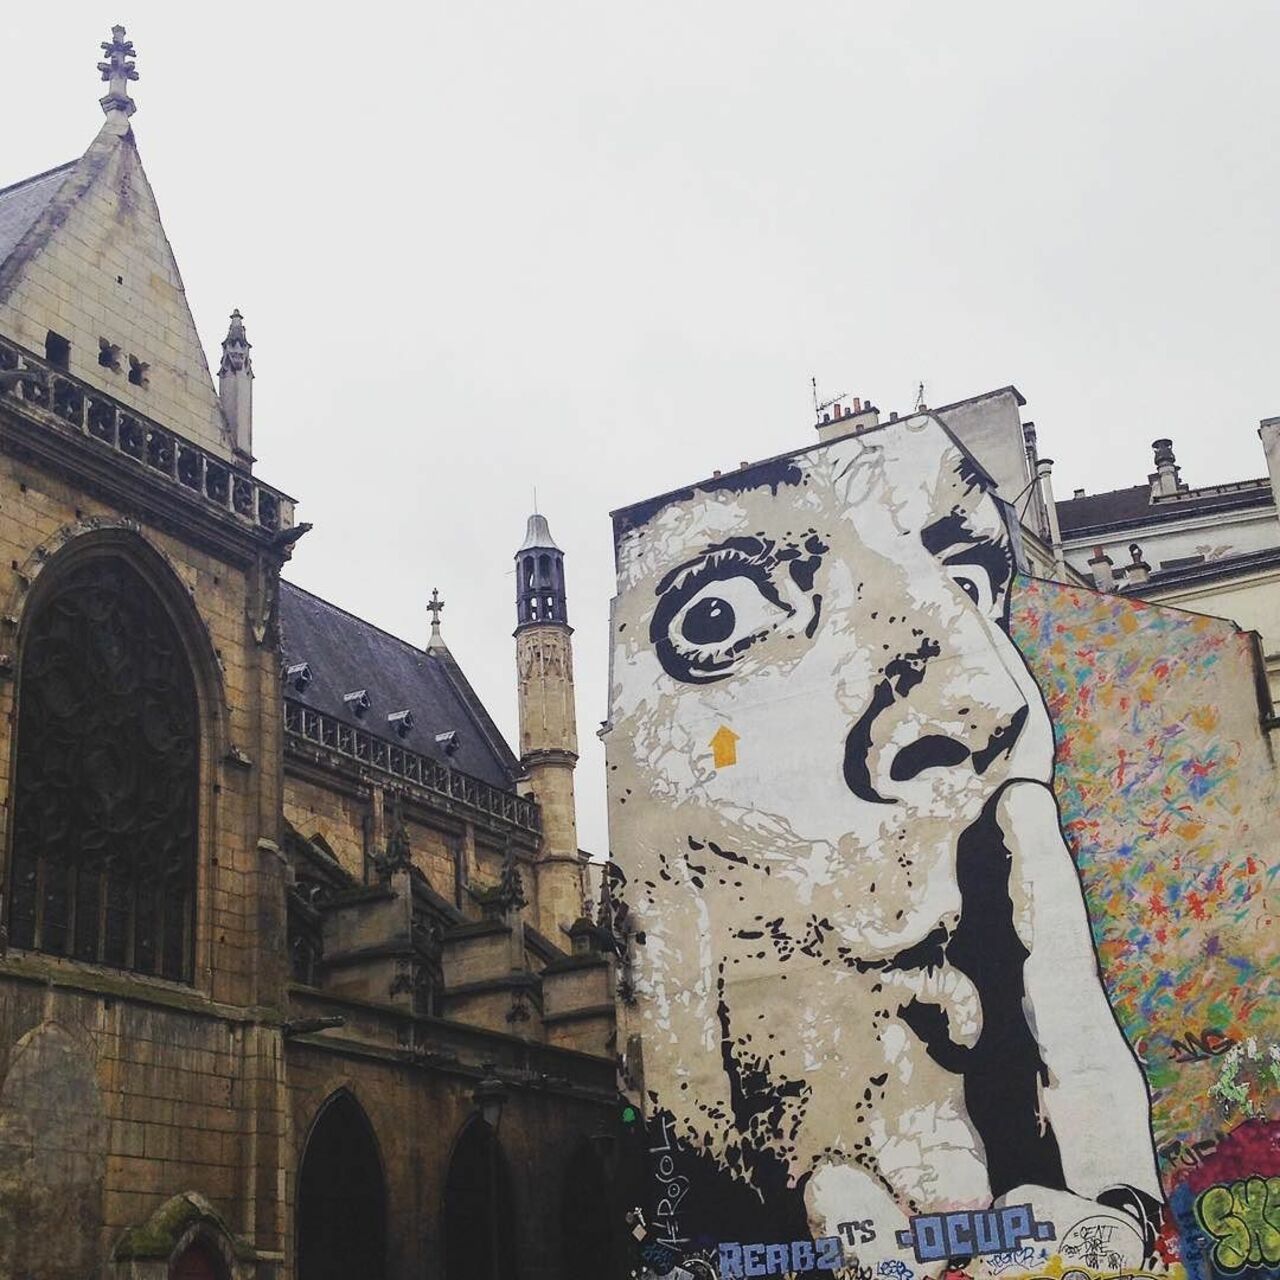 circumjacent_fr: #Paris #graffiti photo by oystersnapper http://ift.tt/1XqJc23 #StreetArt https://t.co/xeTi8xyRu9